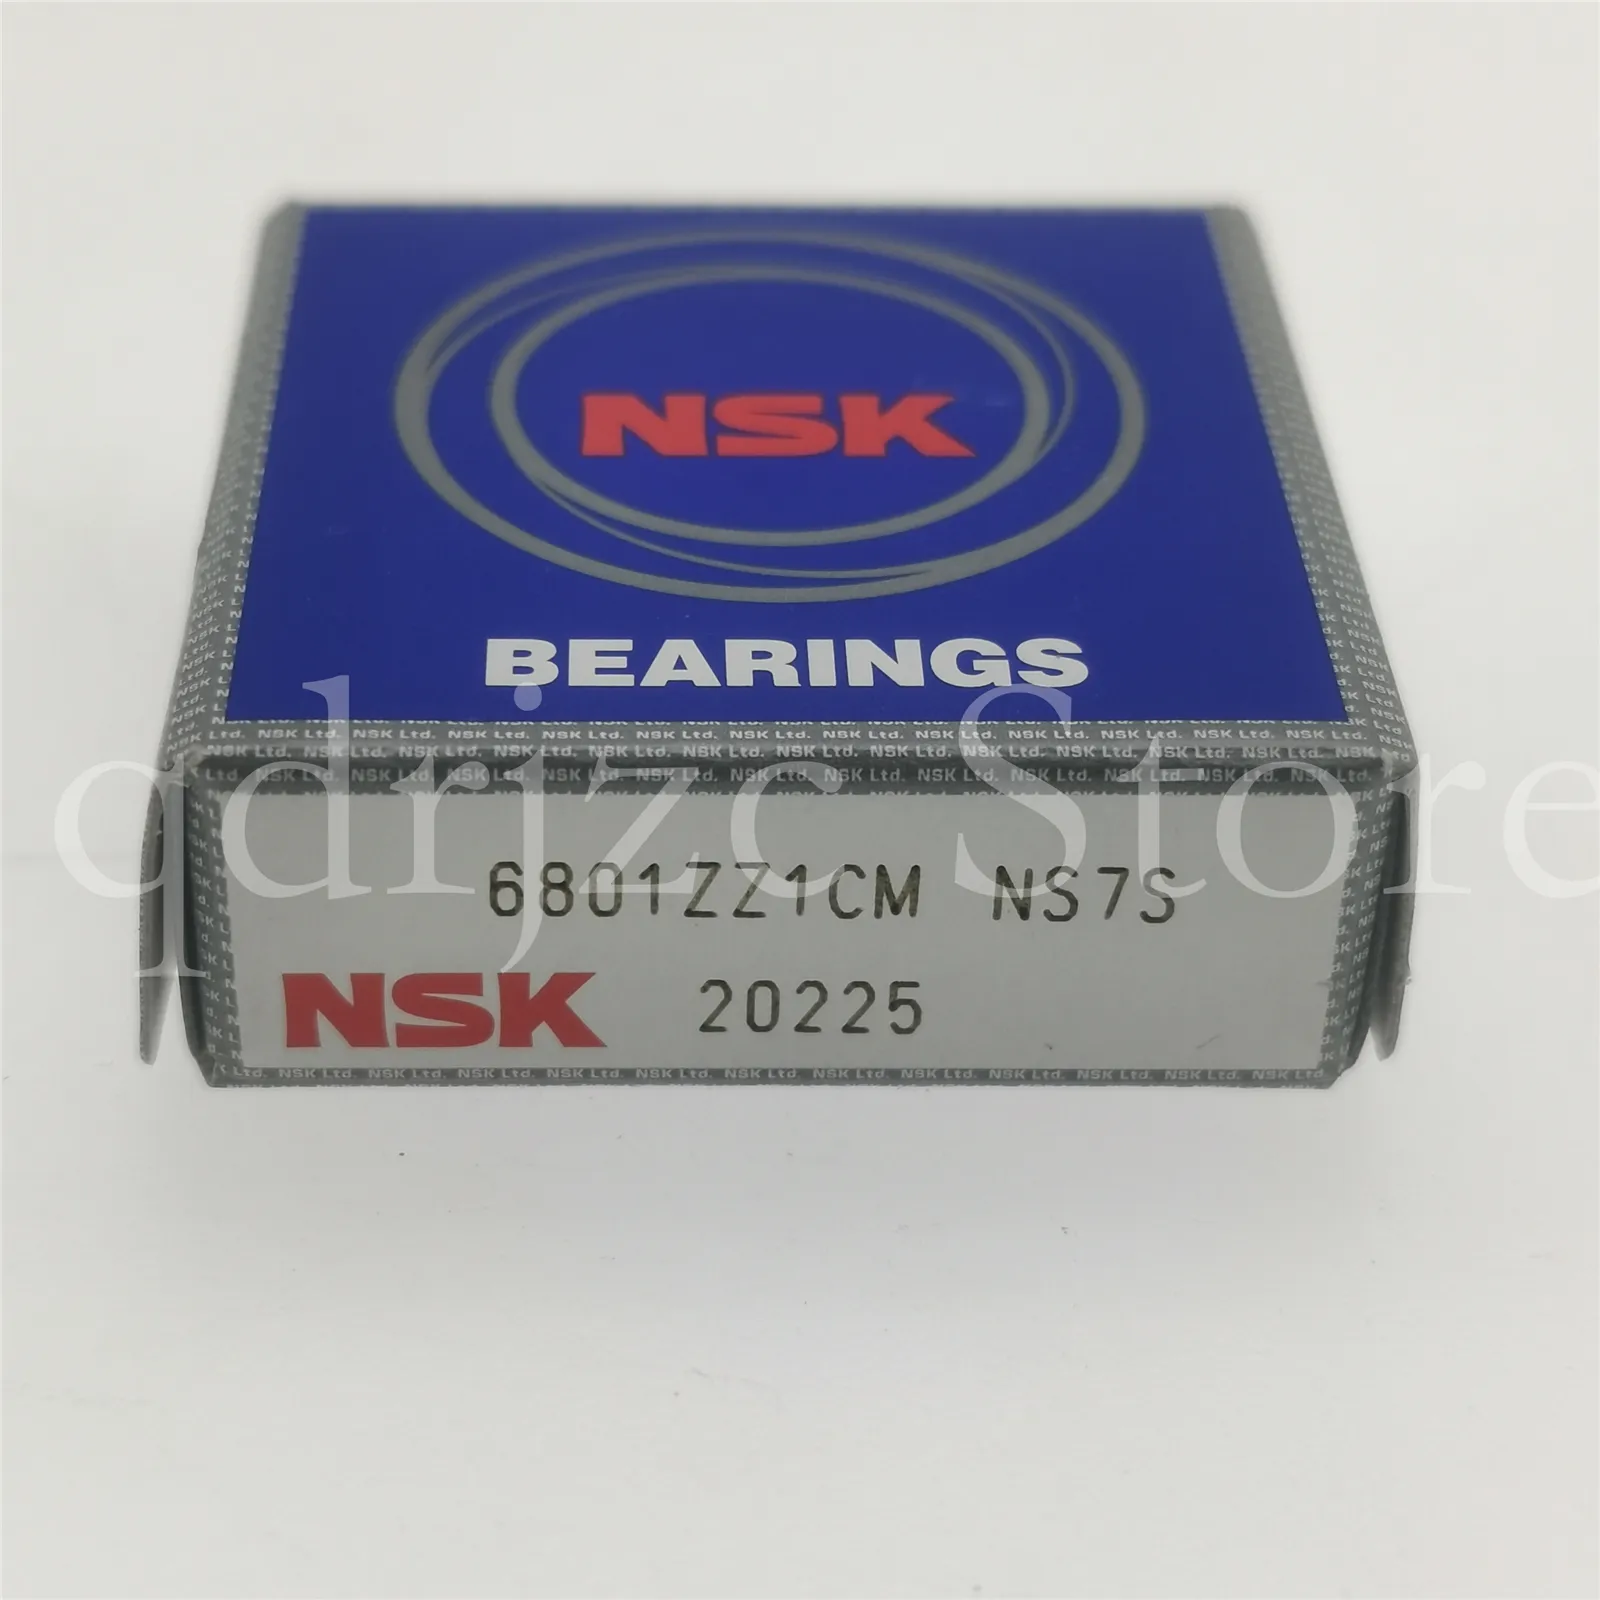 10 PCS NSK Deep Groove Ball Bearing 6801zz1cm 6801Z 6801zzcm 61801-2Z 12mm x 21mm x 5mm